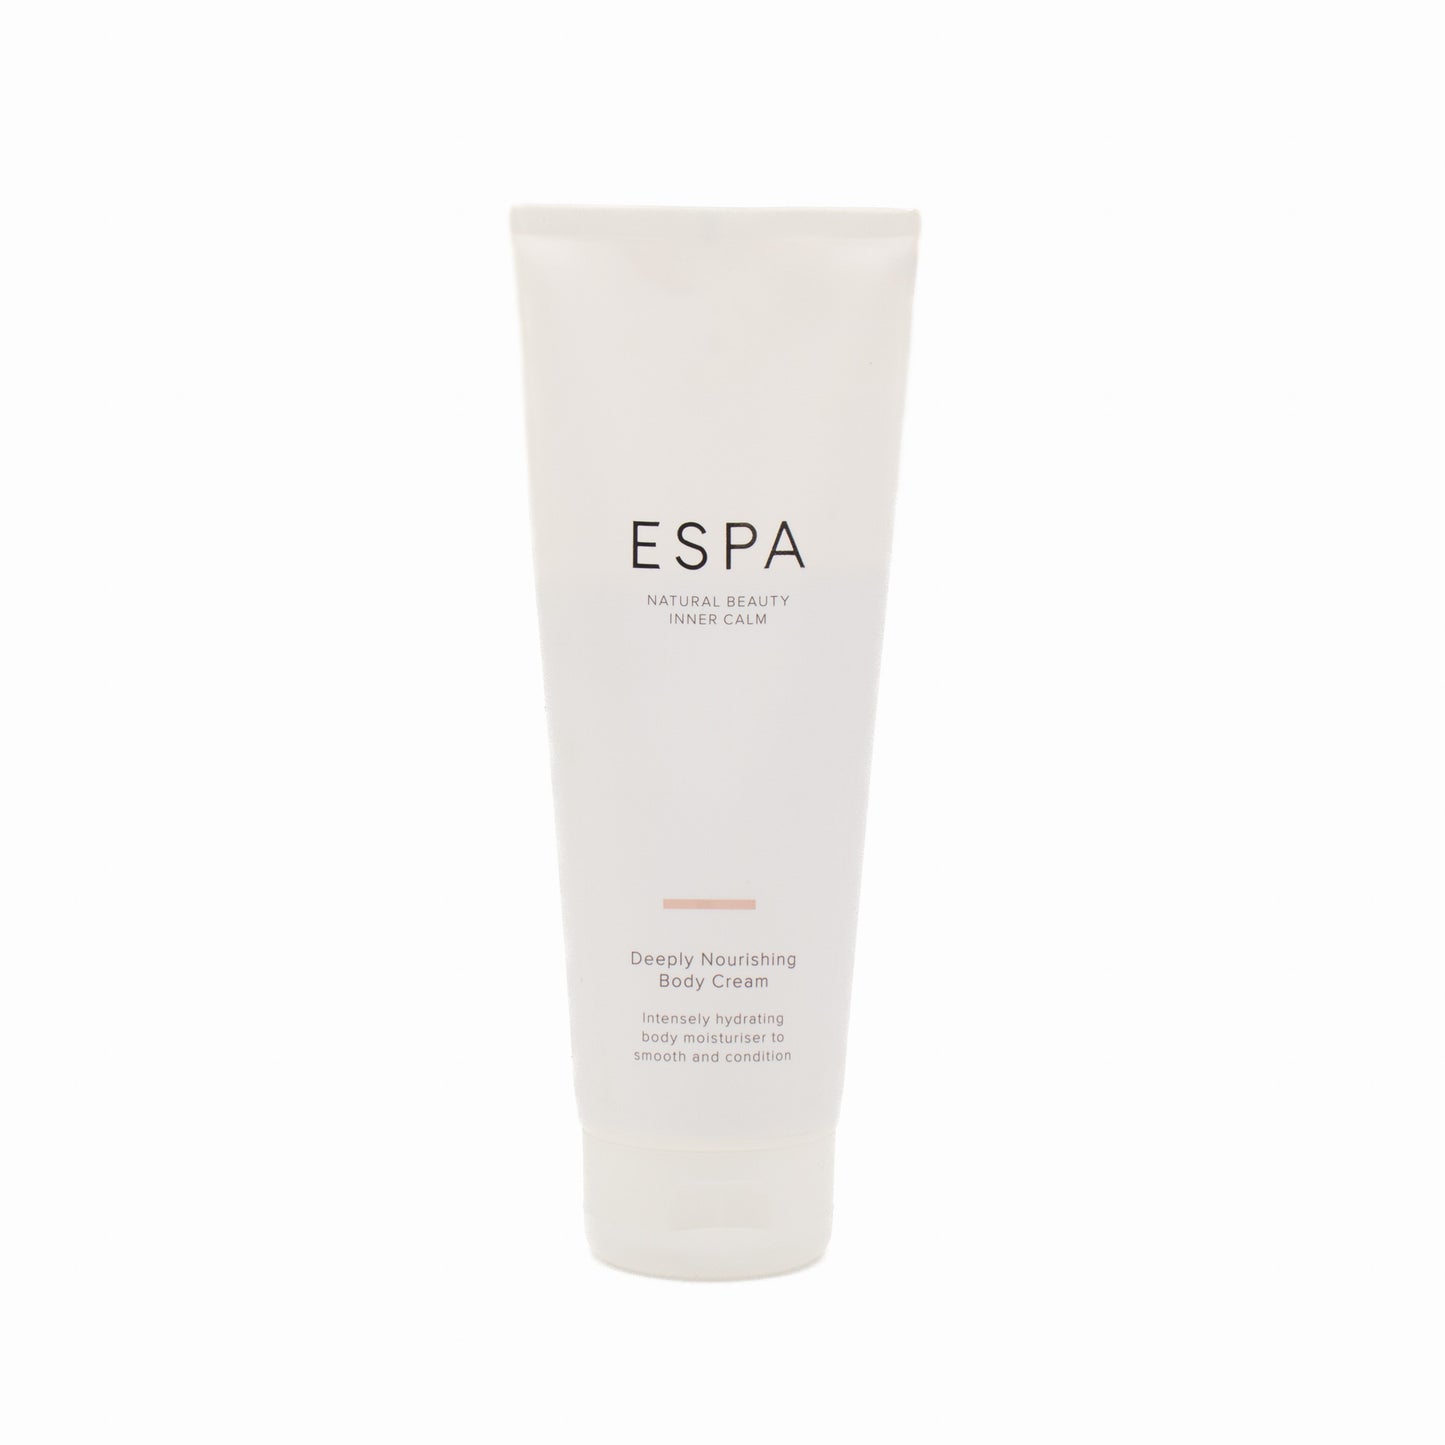 ESPA Deeply Nourishing Body Cream 200ml Tube - Imperfect Box